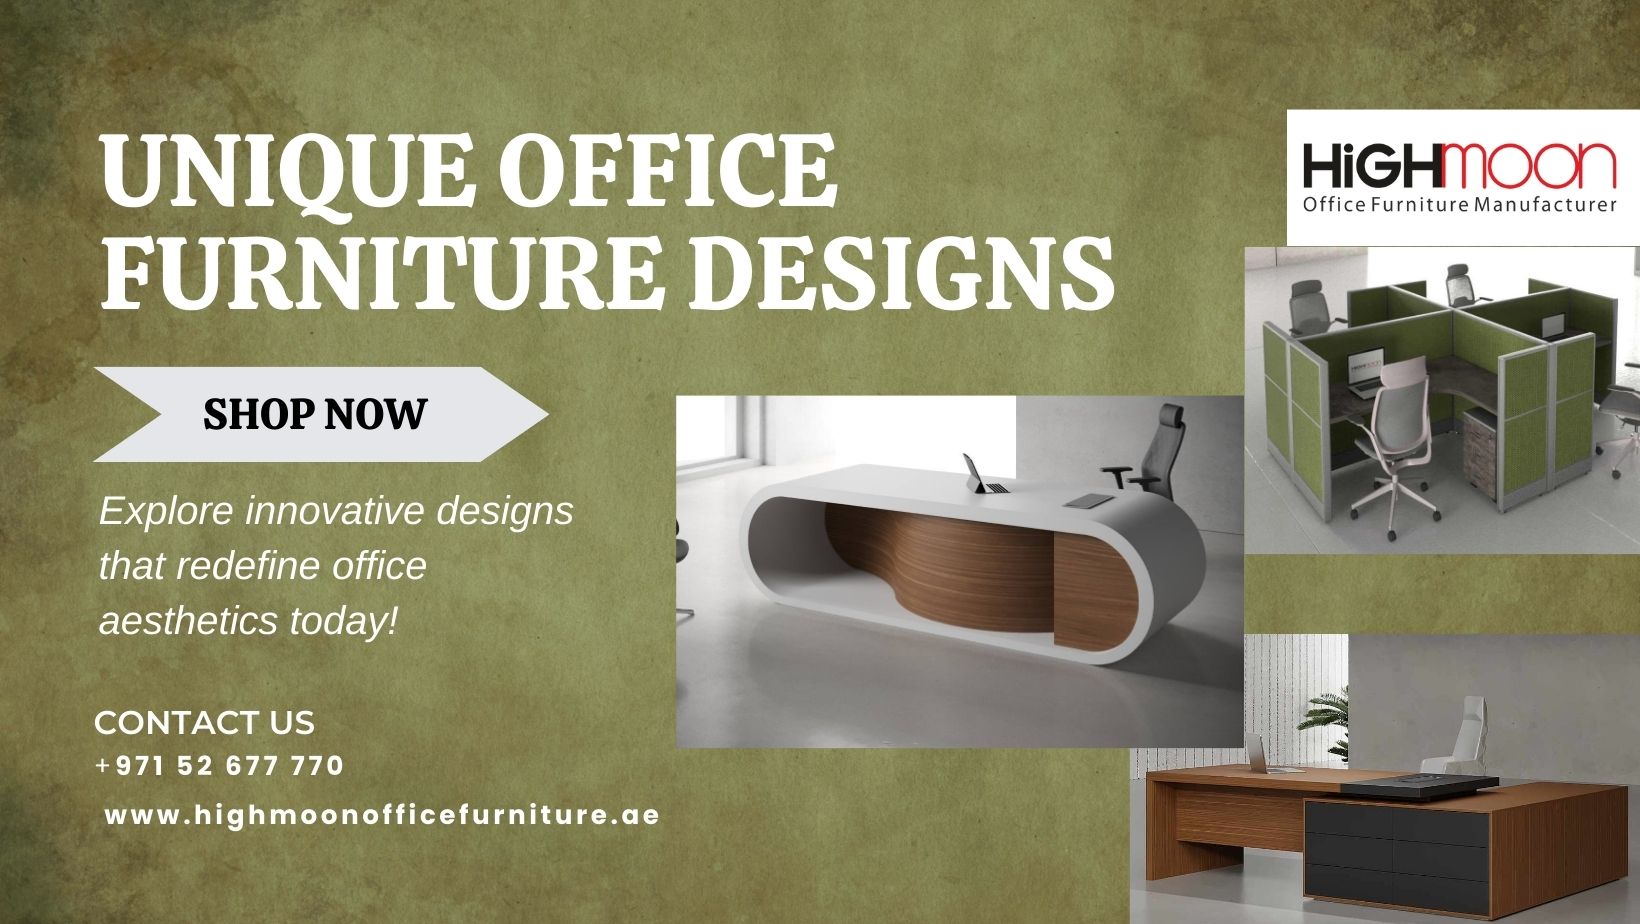 Unique Office Furniture Trends